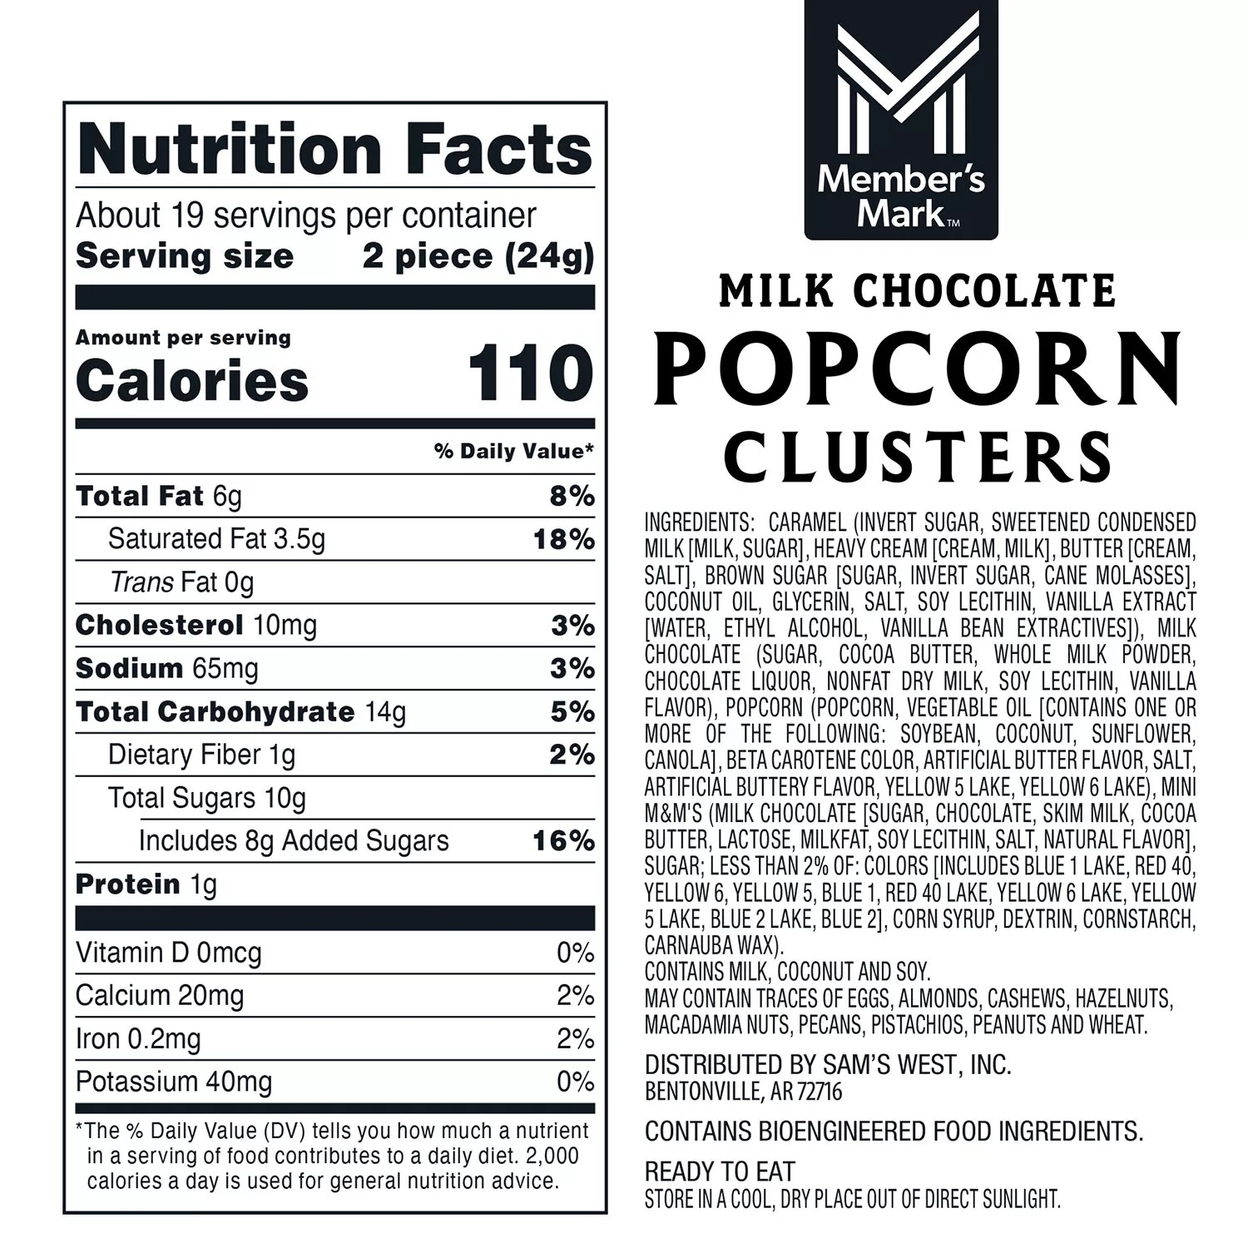 Member's Mark Milk Chocolate Popcorn Clusters (16 Ounce)